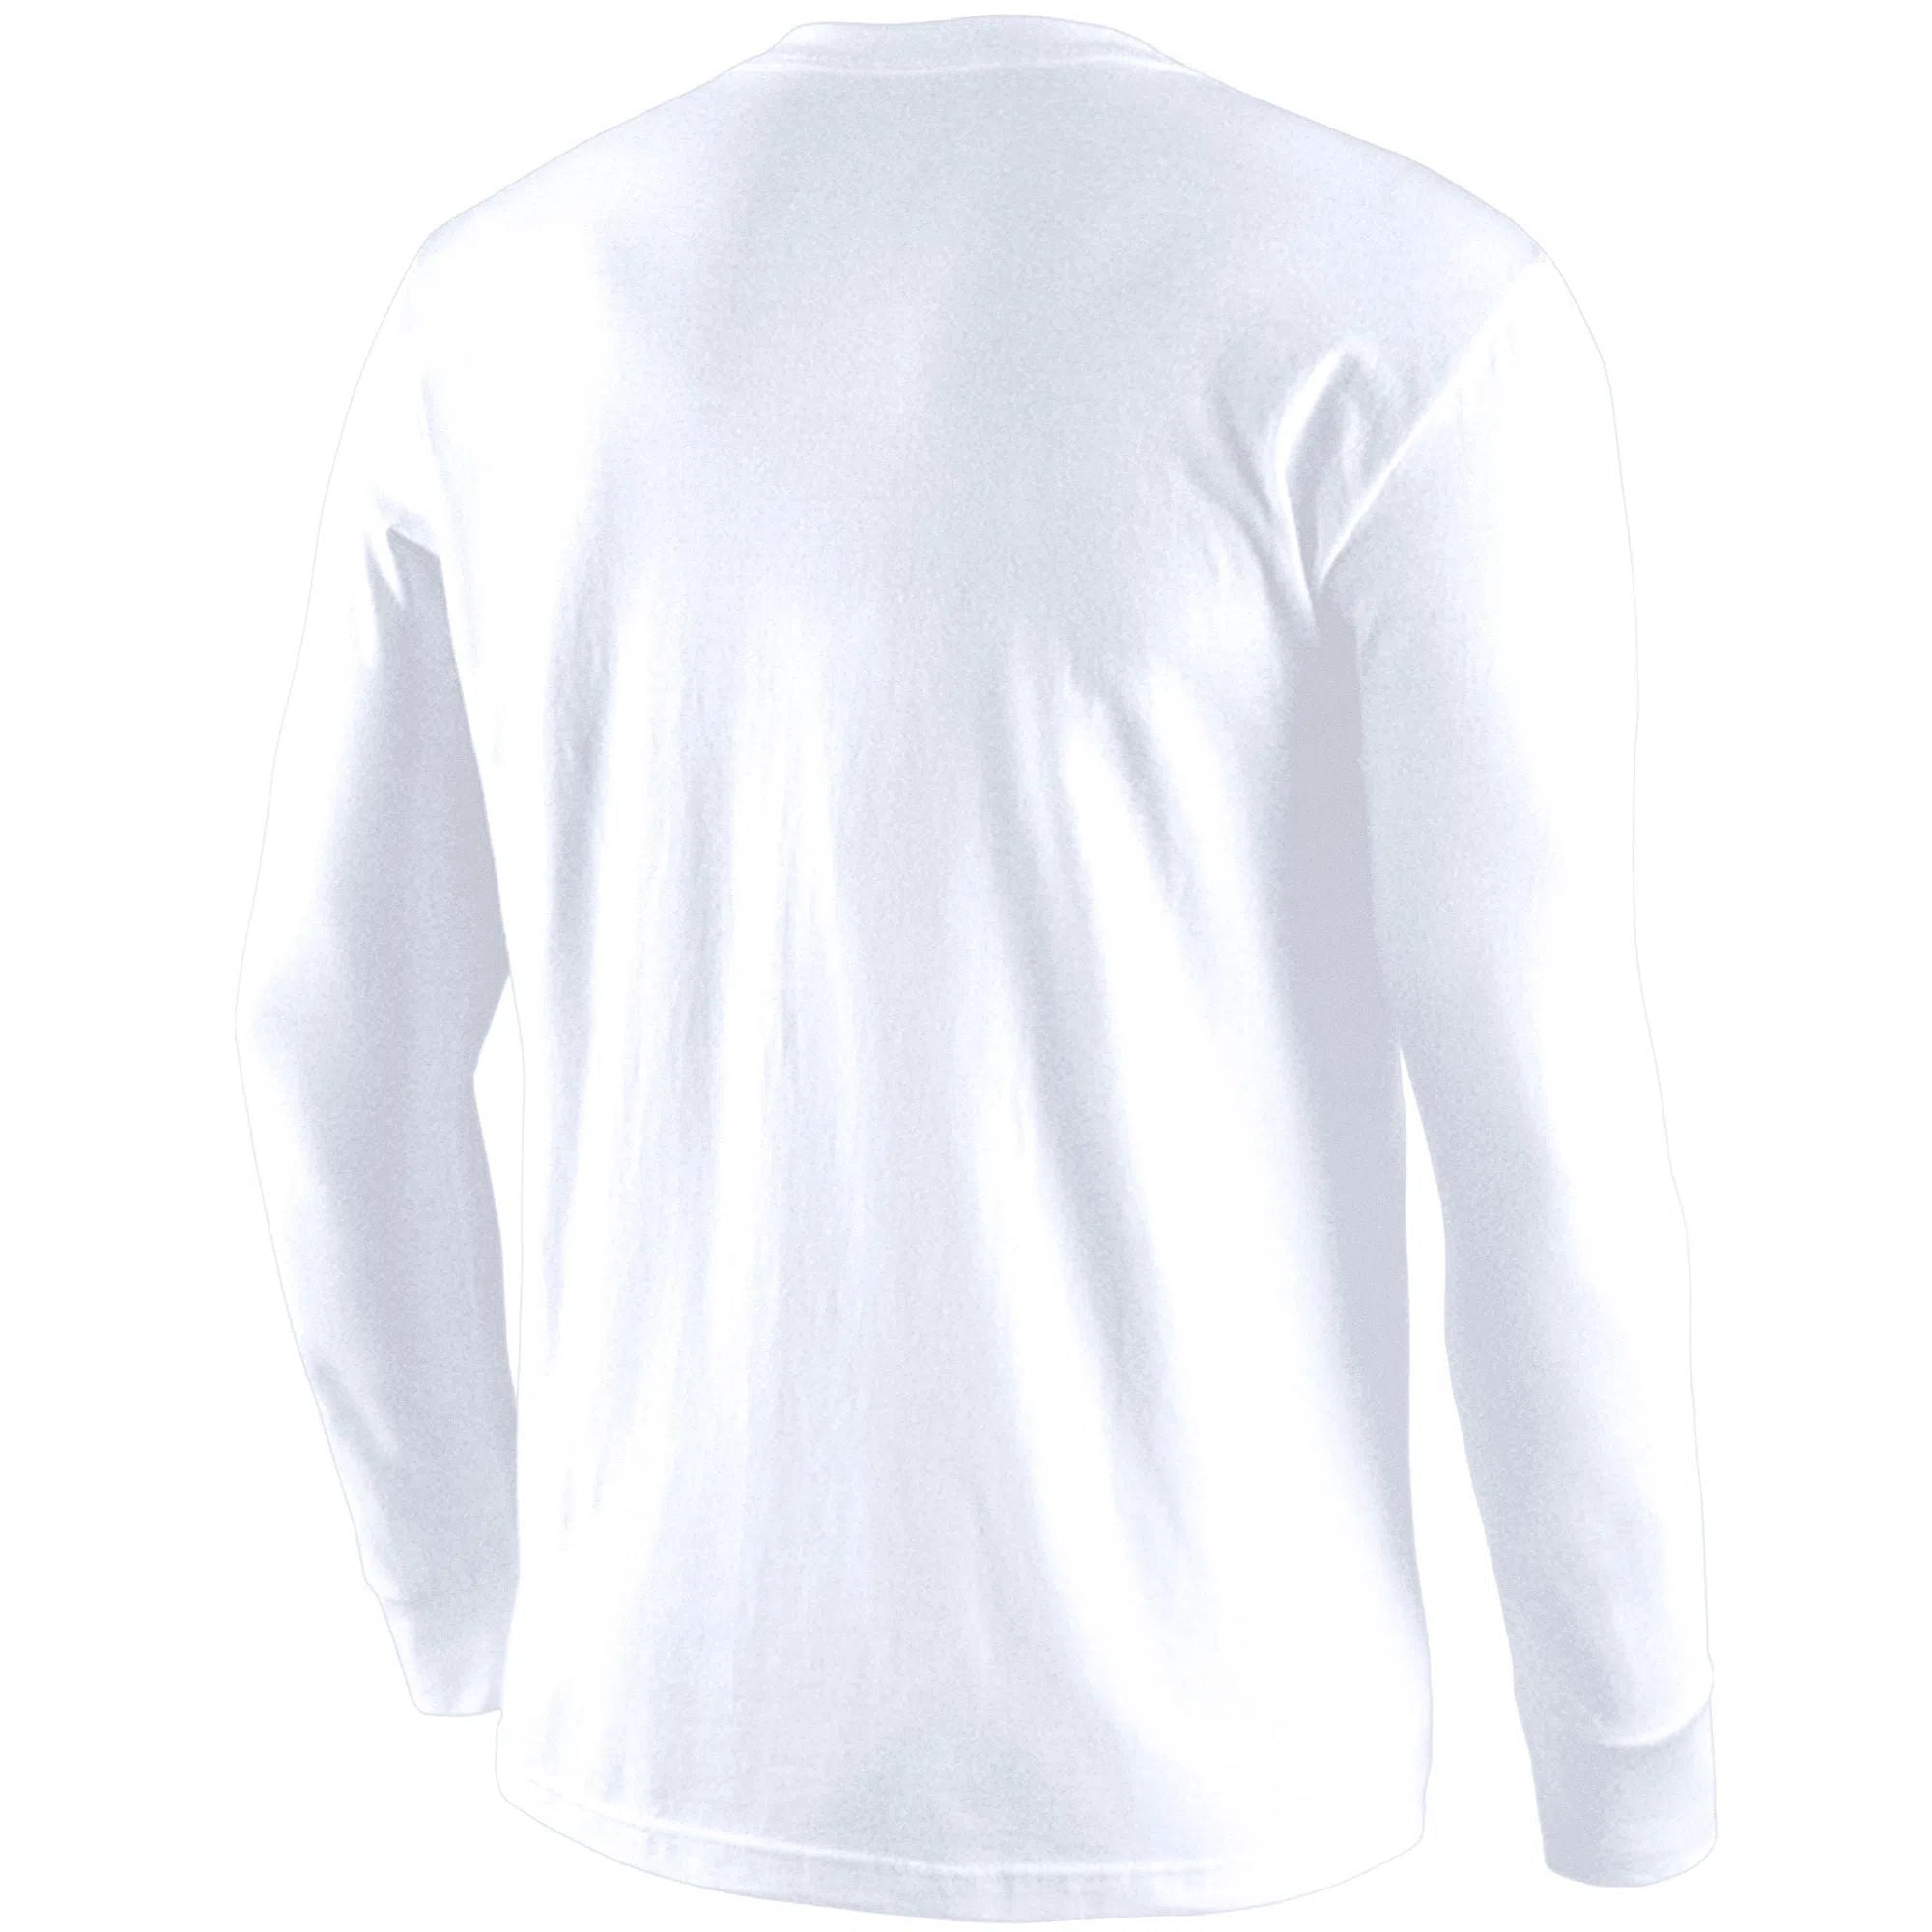 Nike DriFit Legend Long Sleeve T-Shirt